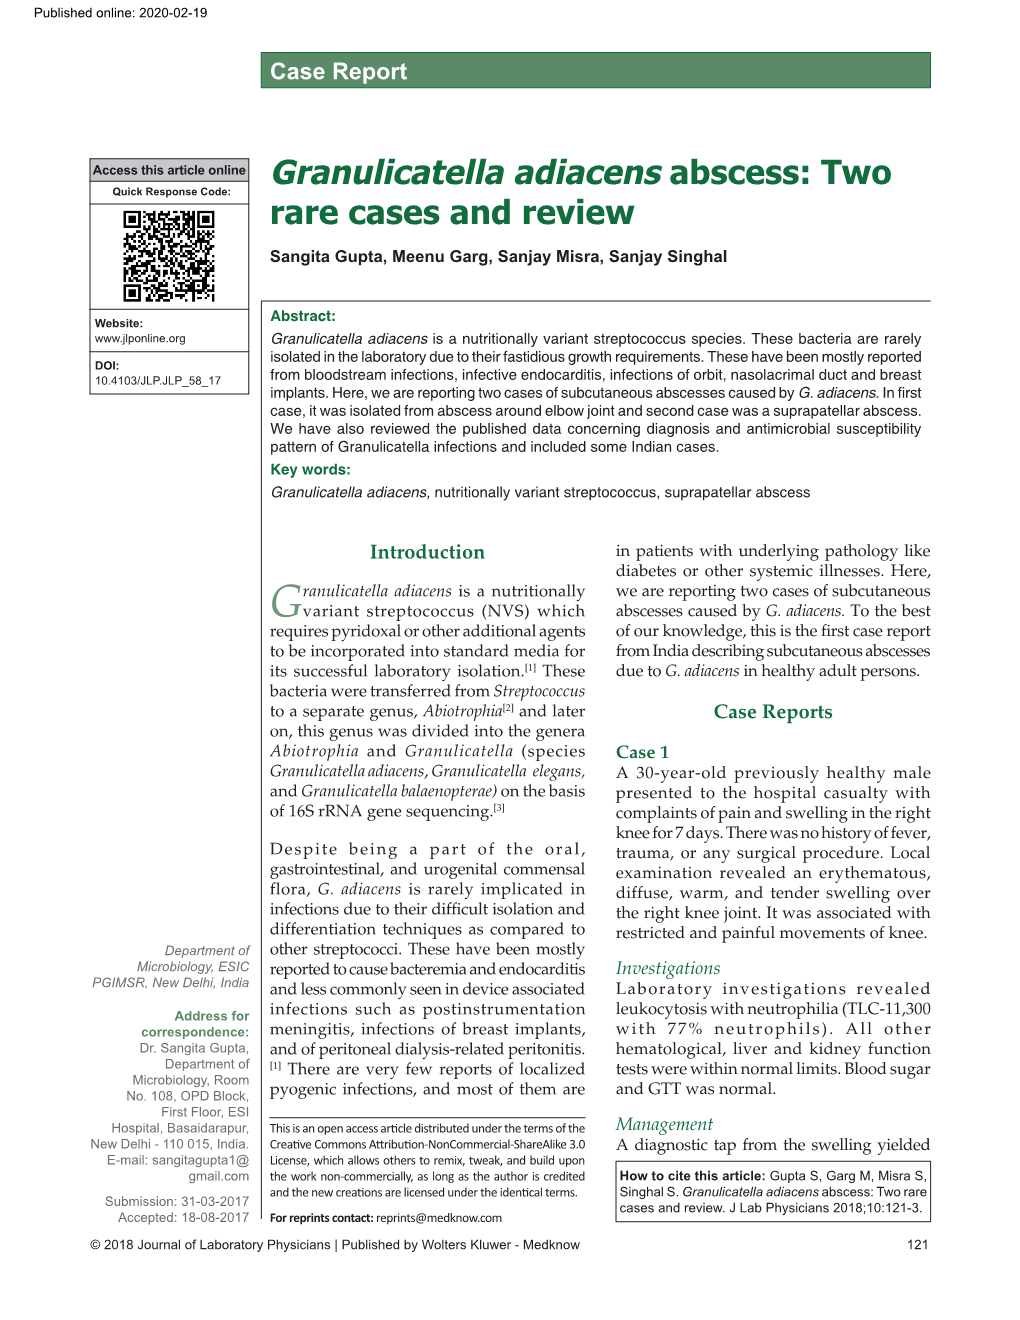 Granulicatella Adiacens Abscess: Two Rare Cases and Review Sangita Gupta, Meenu Garg, Sanjay Misra, Sanjay Singhal